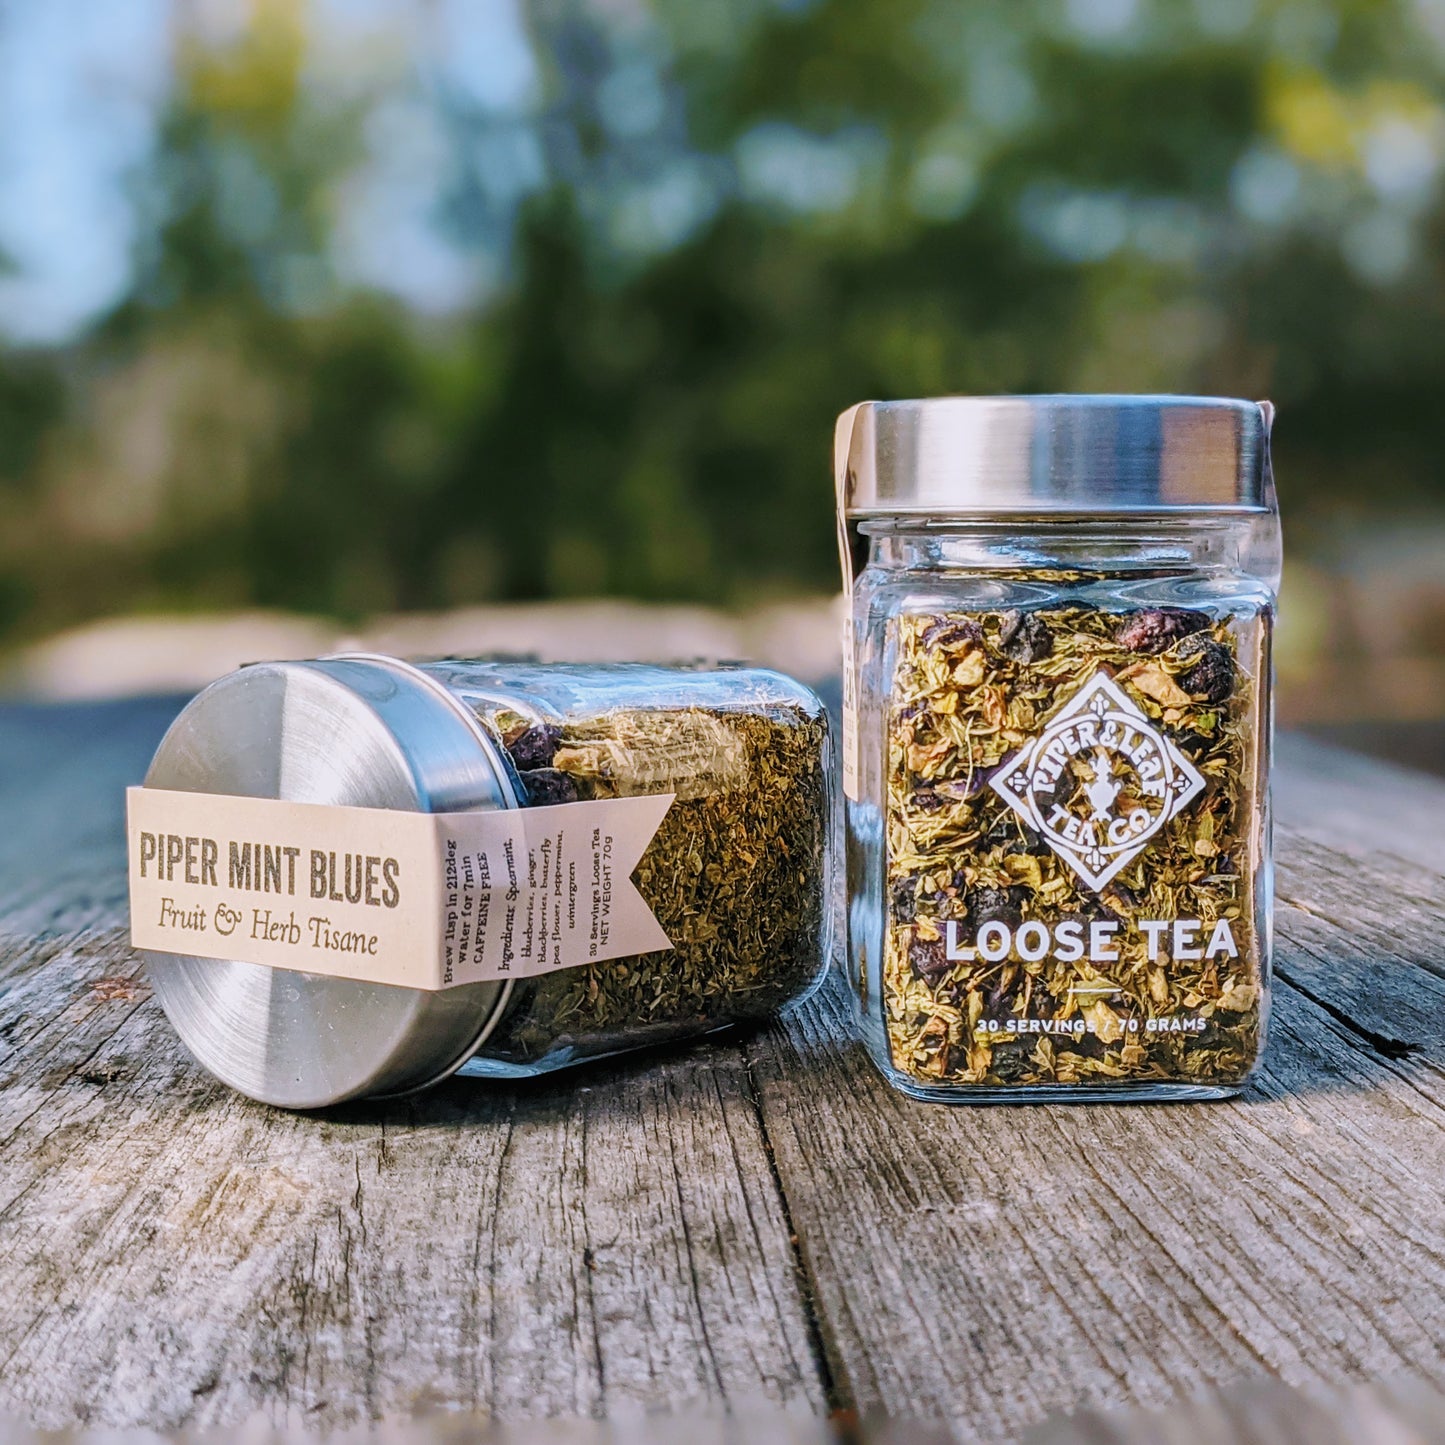 Piper Mint Blues Glass Jar of Loose Leaf Tea - 30 Servings